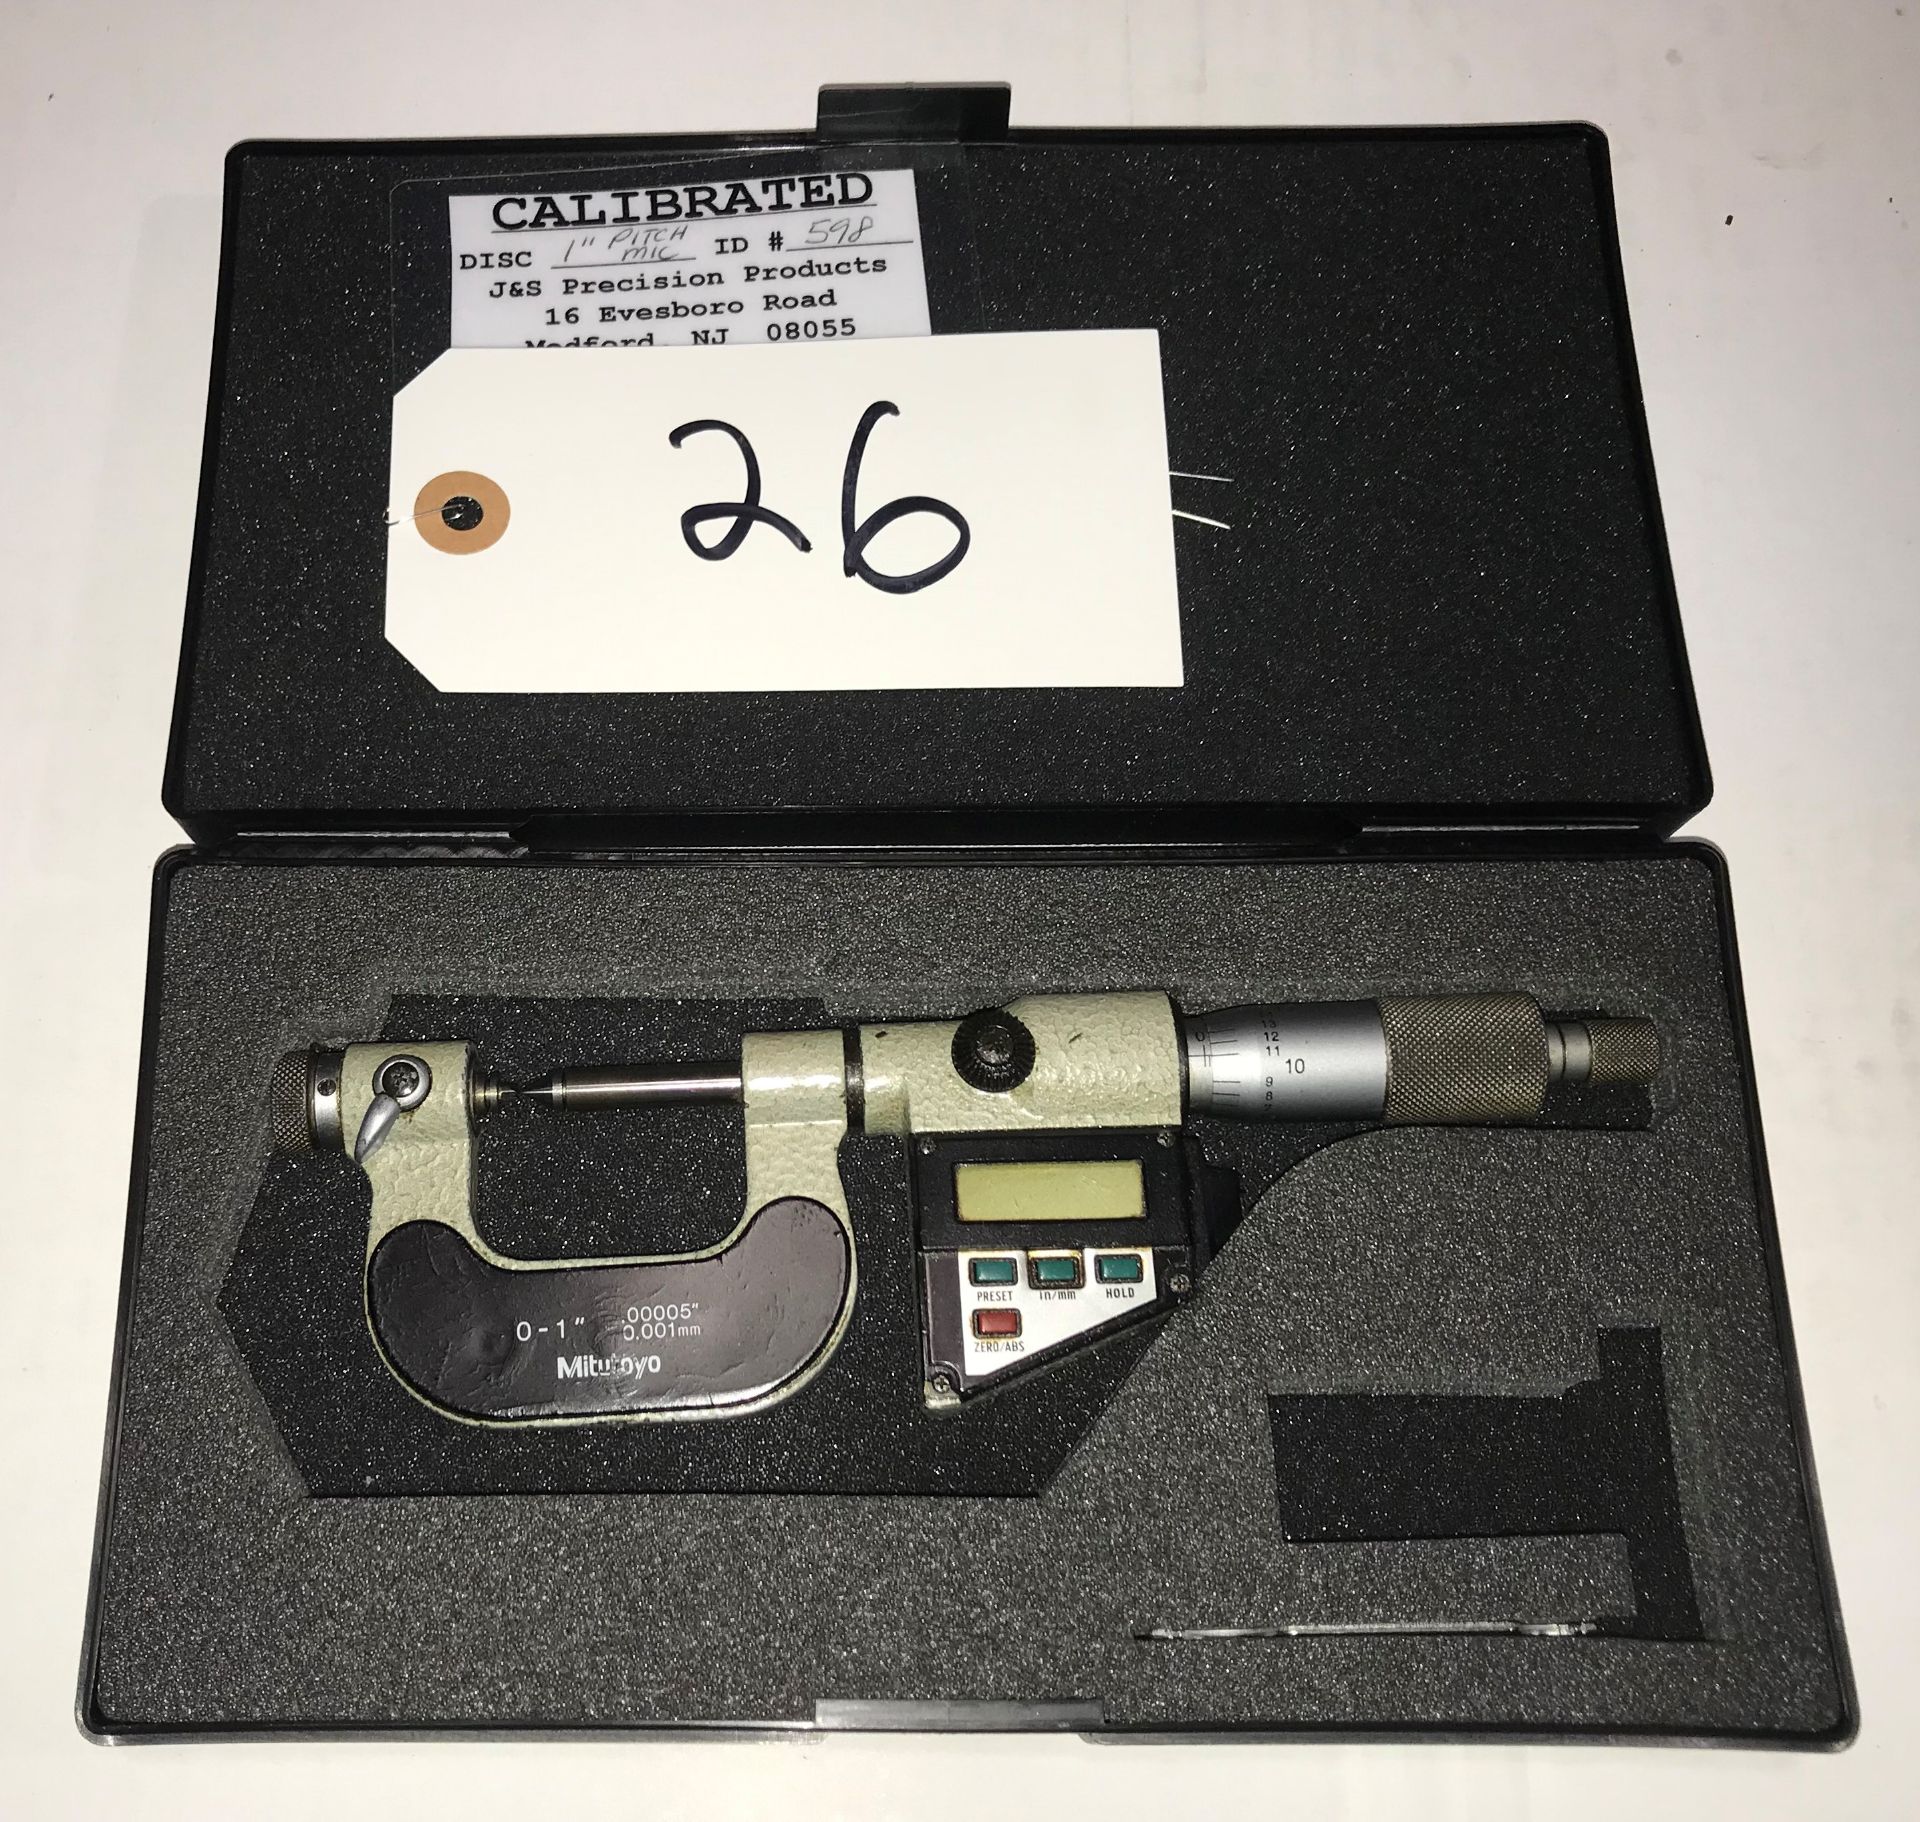 Mitutoyo 0 - 1" Digital Pitch Micrometer